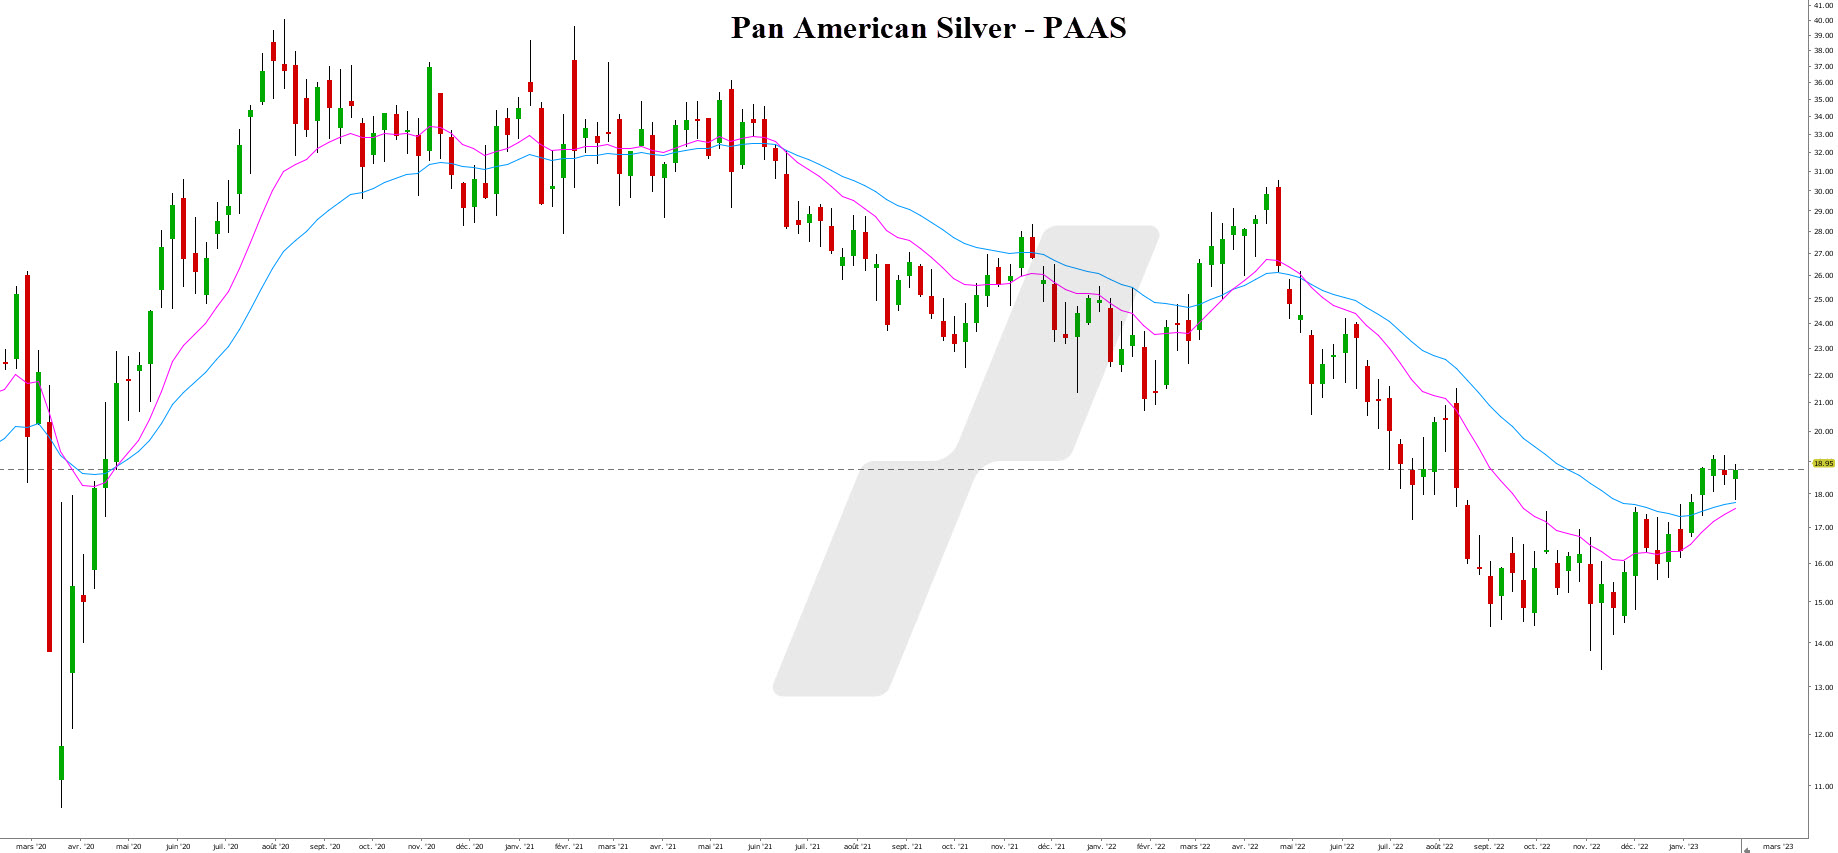 investir dans l'argent - trader l'argent - graphique pan american silver